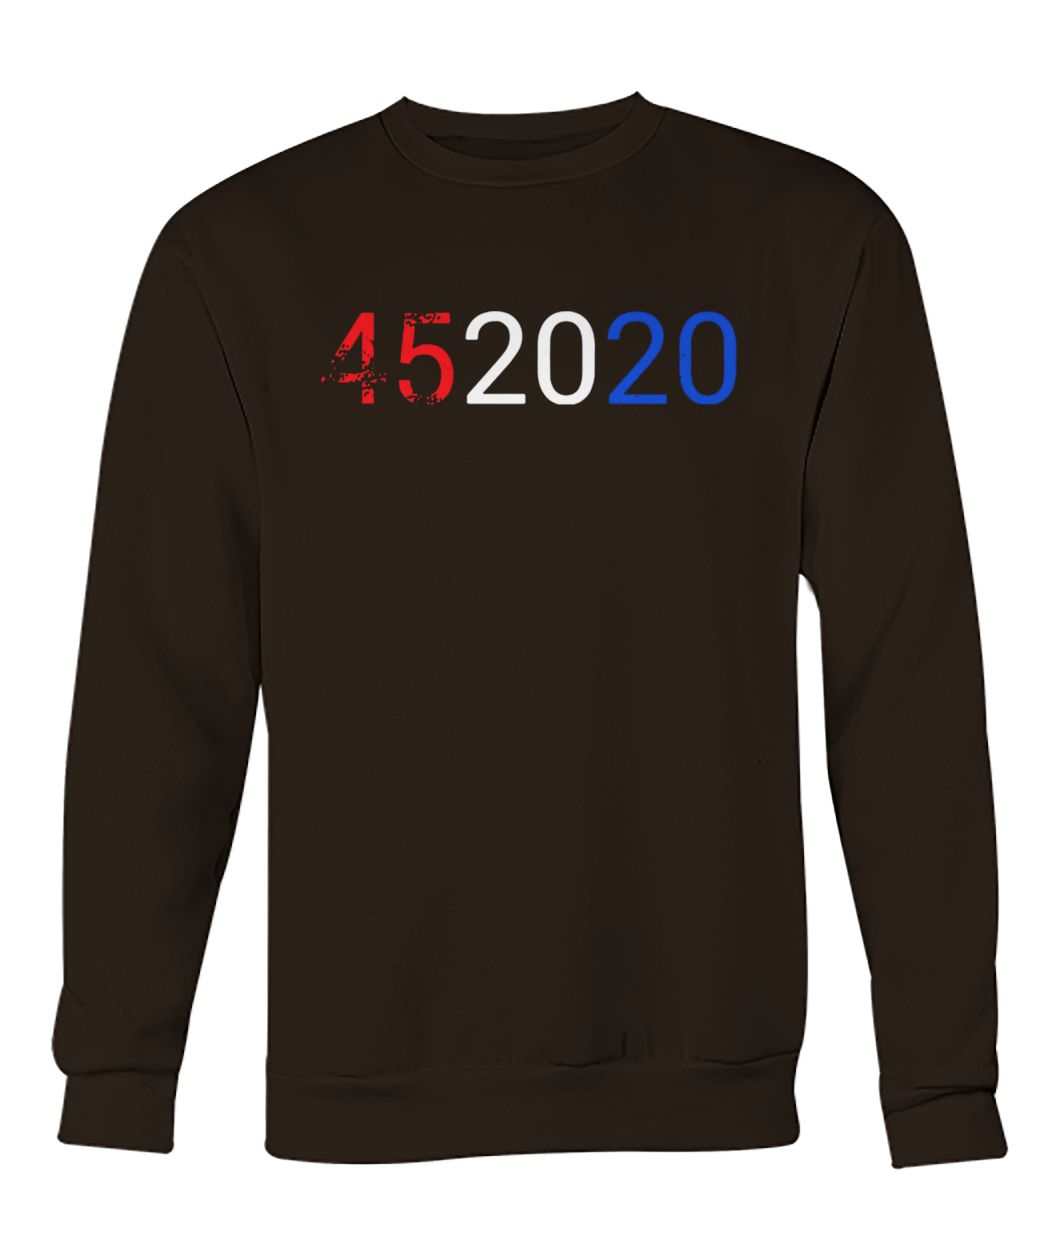 452020 vote Donald Trump crew neck sweatshirt